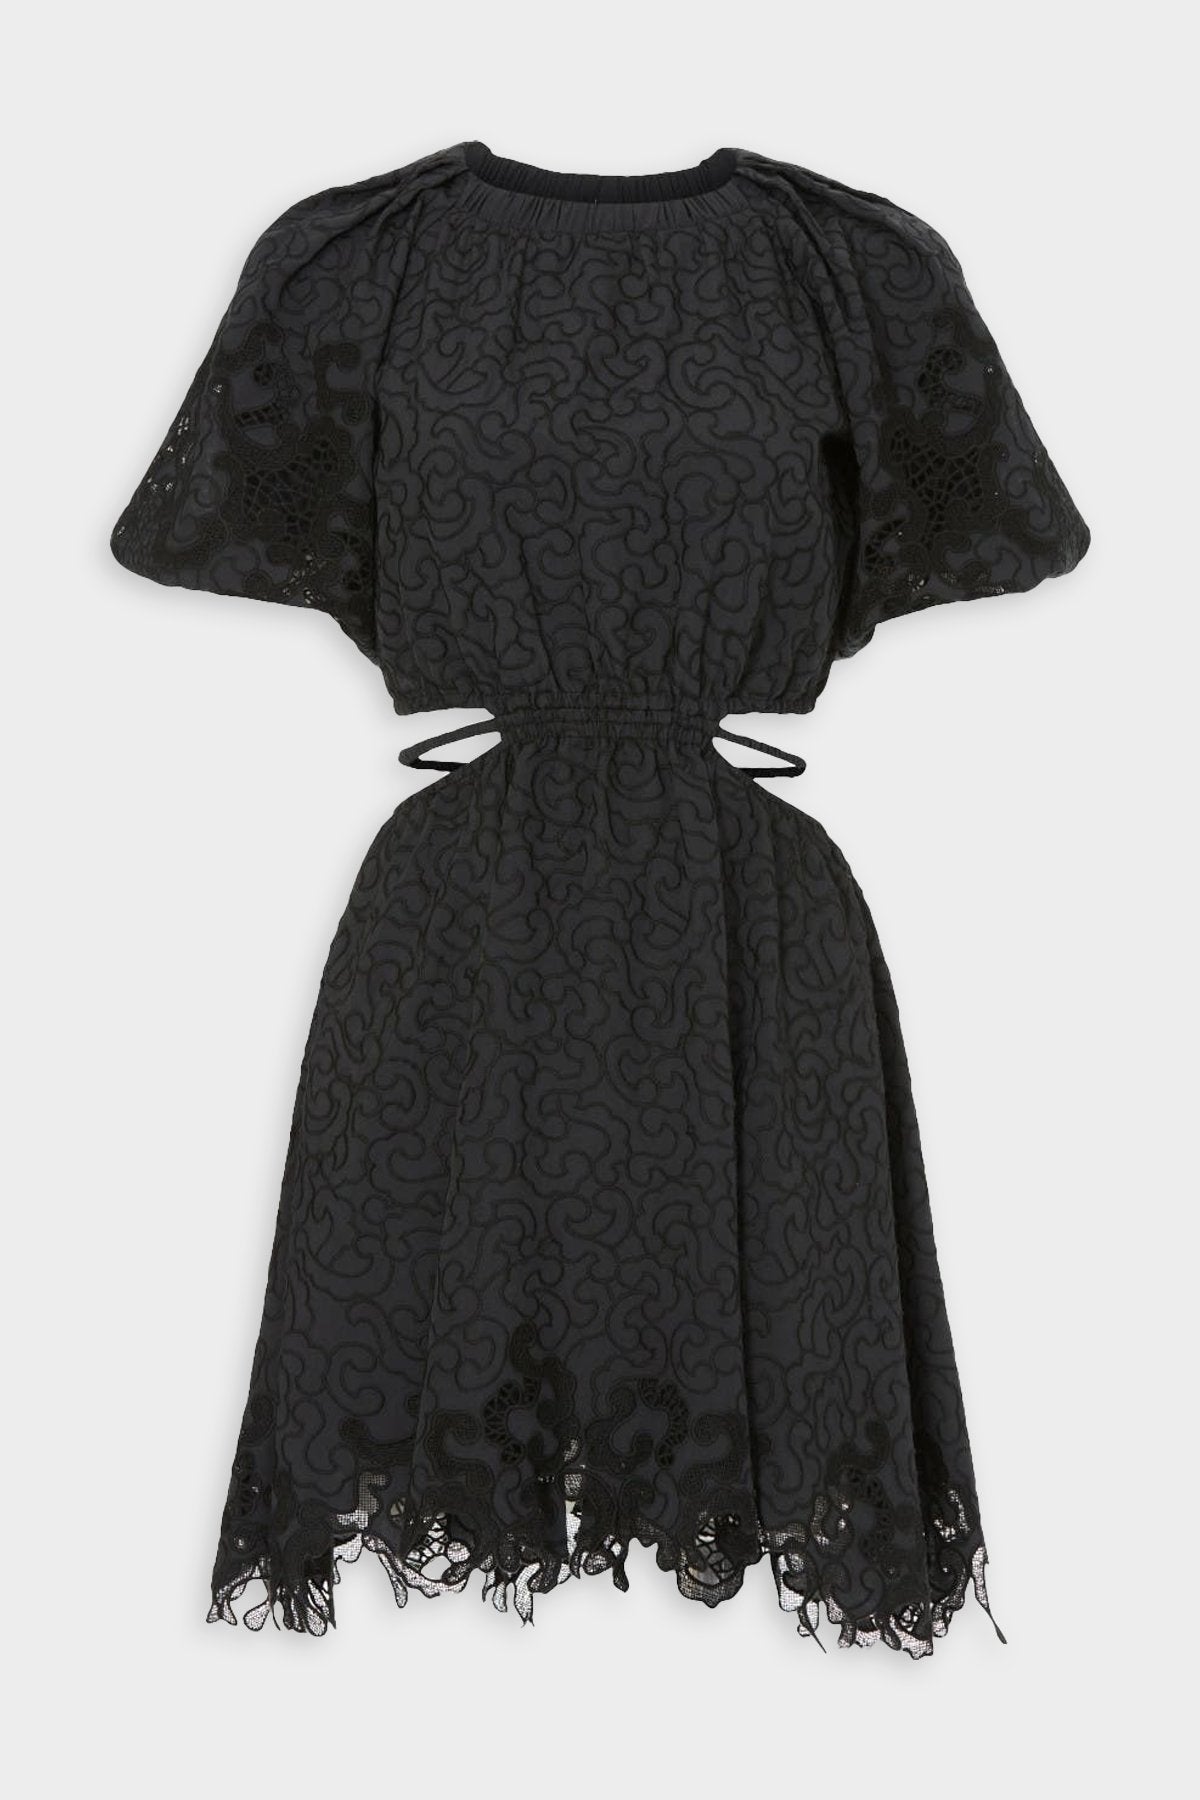 Anaise Geometric Cut Out Embroidery Puff Mini Dress in Black - shop-olivia.com